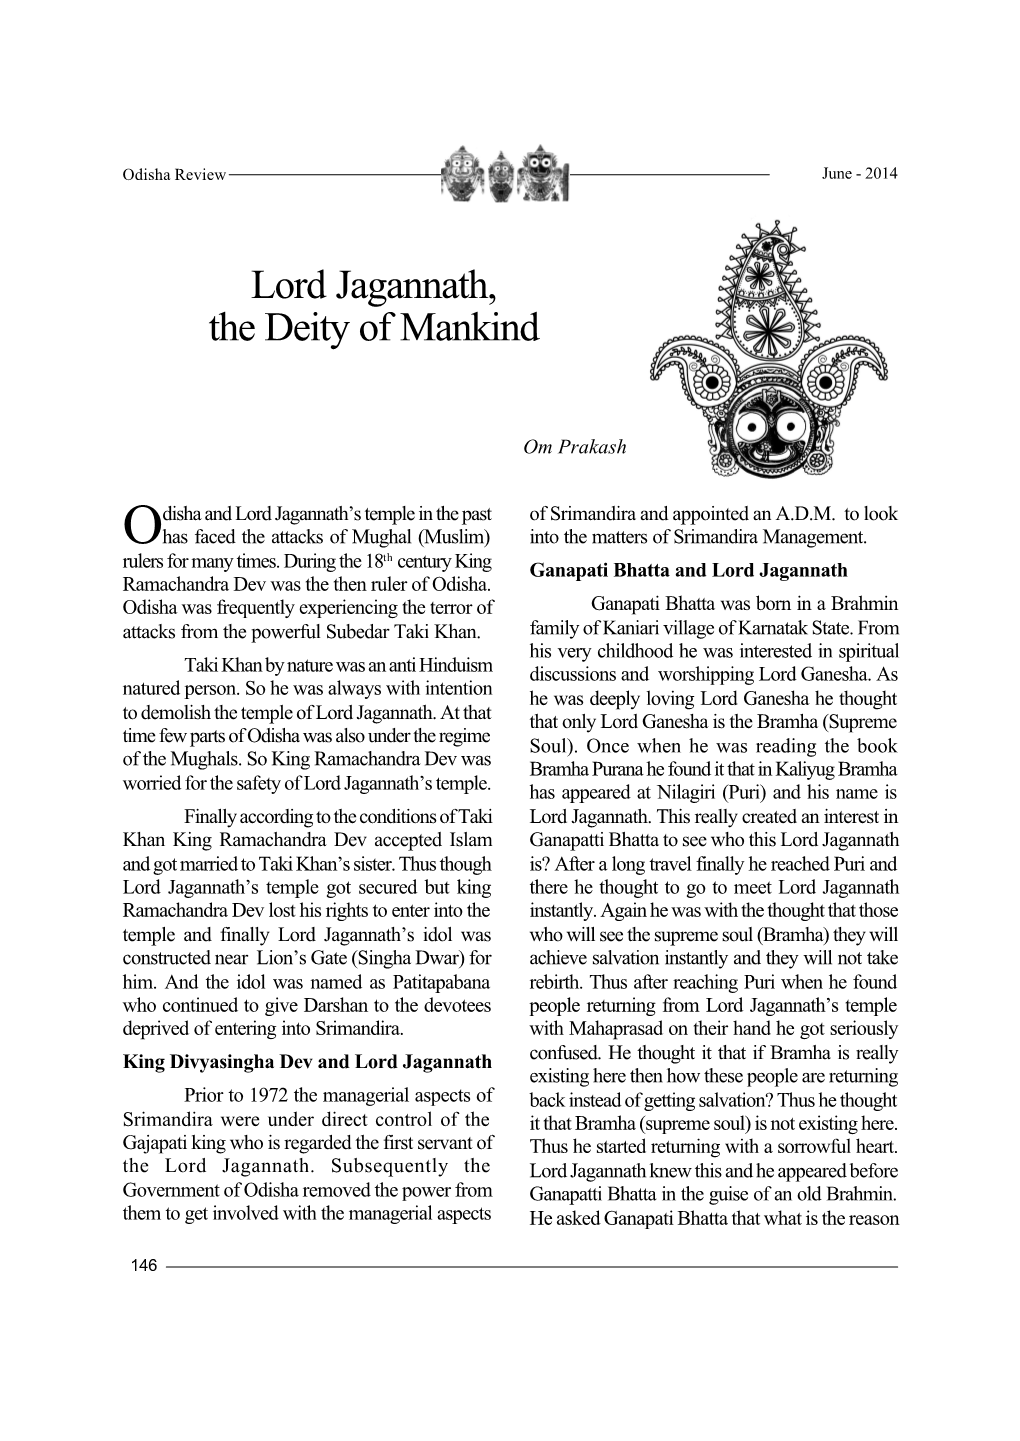 Lord Jagannath, the Deity of Mankind